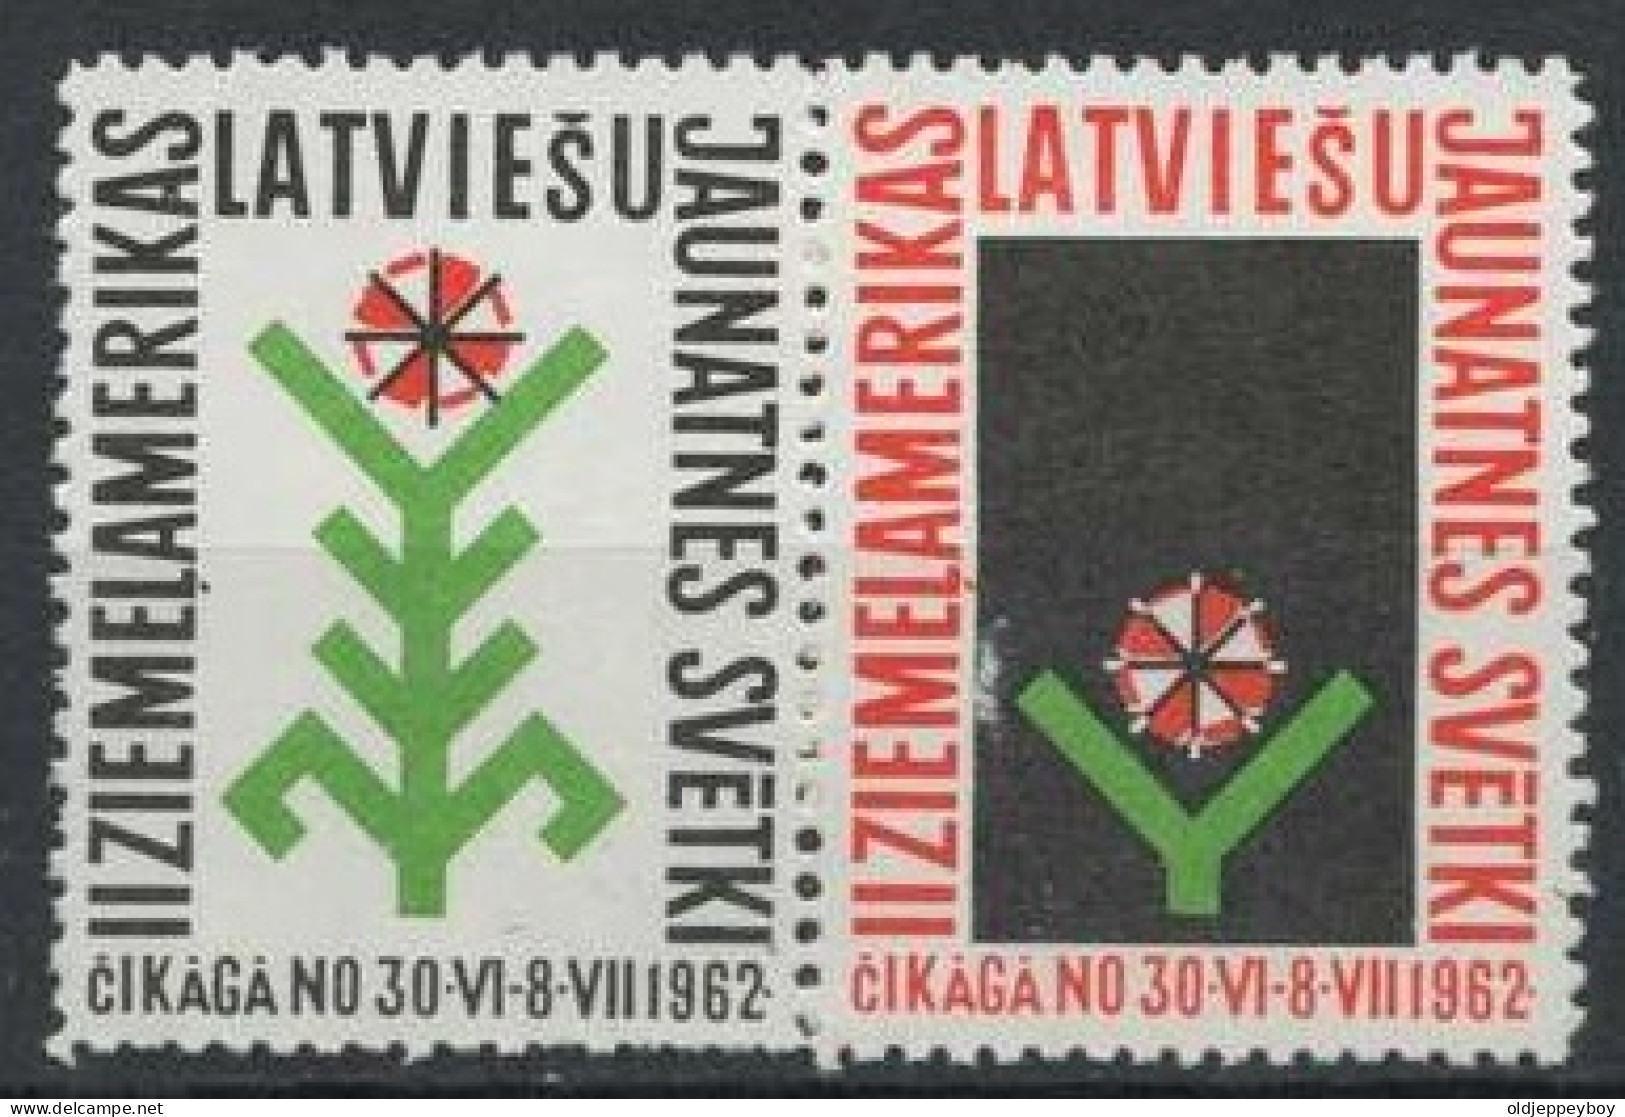  Latvia  1962, Copera Fonds, Exile, Pairs  Pfadfinder Reklamemarke VIGNETTE CINDERELLA SCOUTS SCOUTING - Neufs